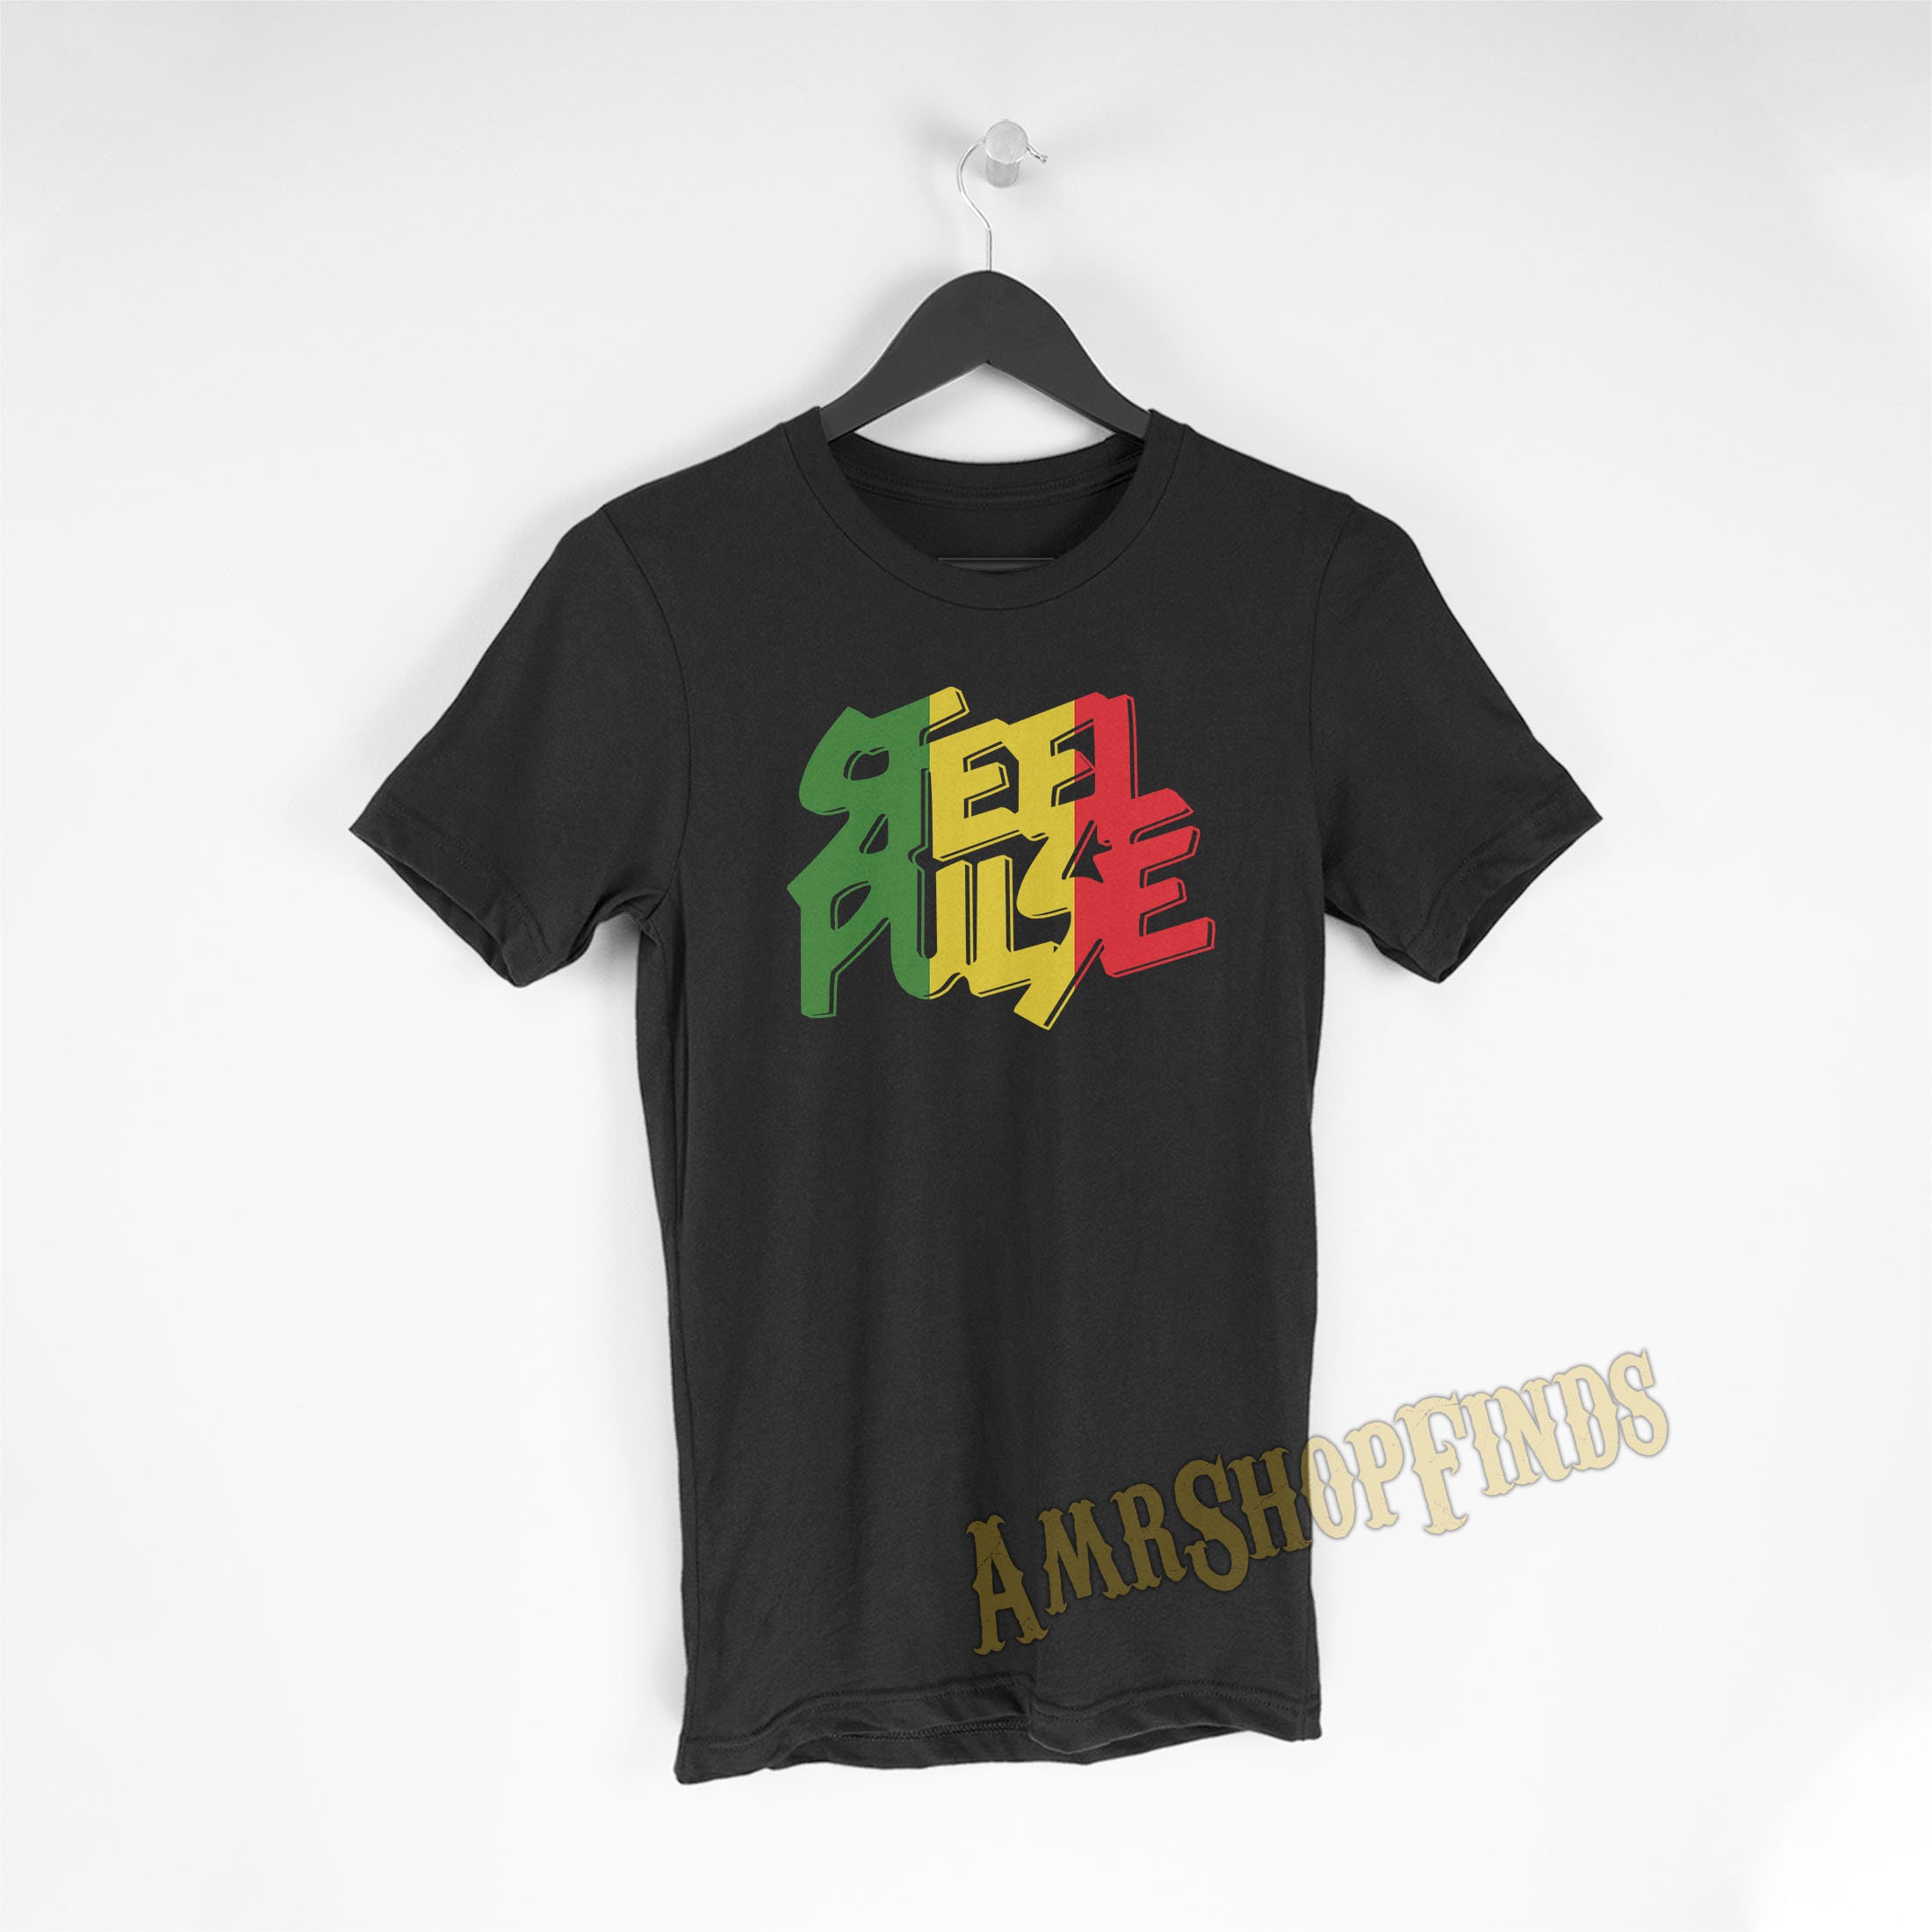 Steel Pulse Band T-shirt Roots Reggae Music Band David Hinds Black White  Sport Grey Gildan T-shirt S-3XL 